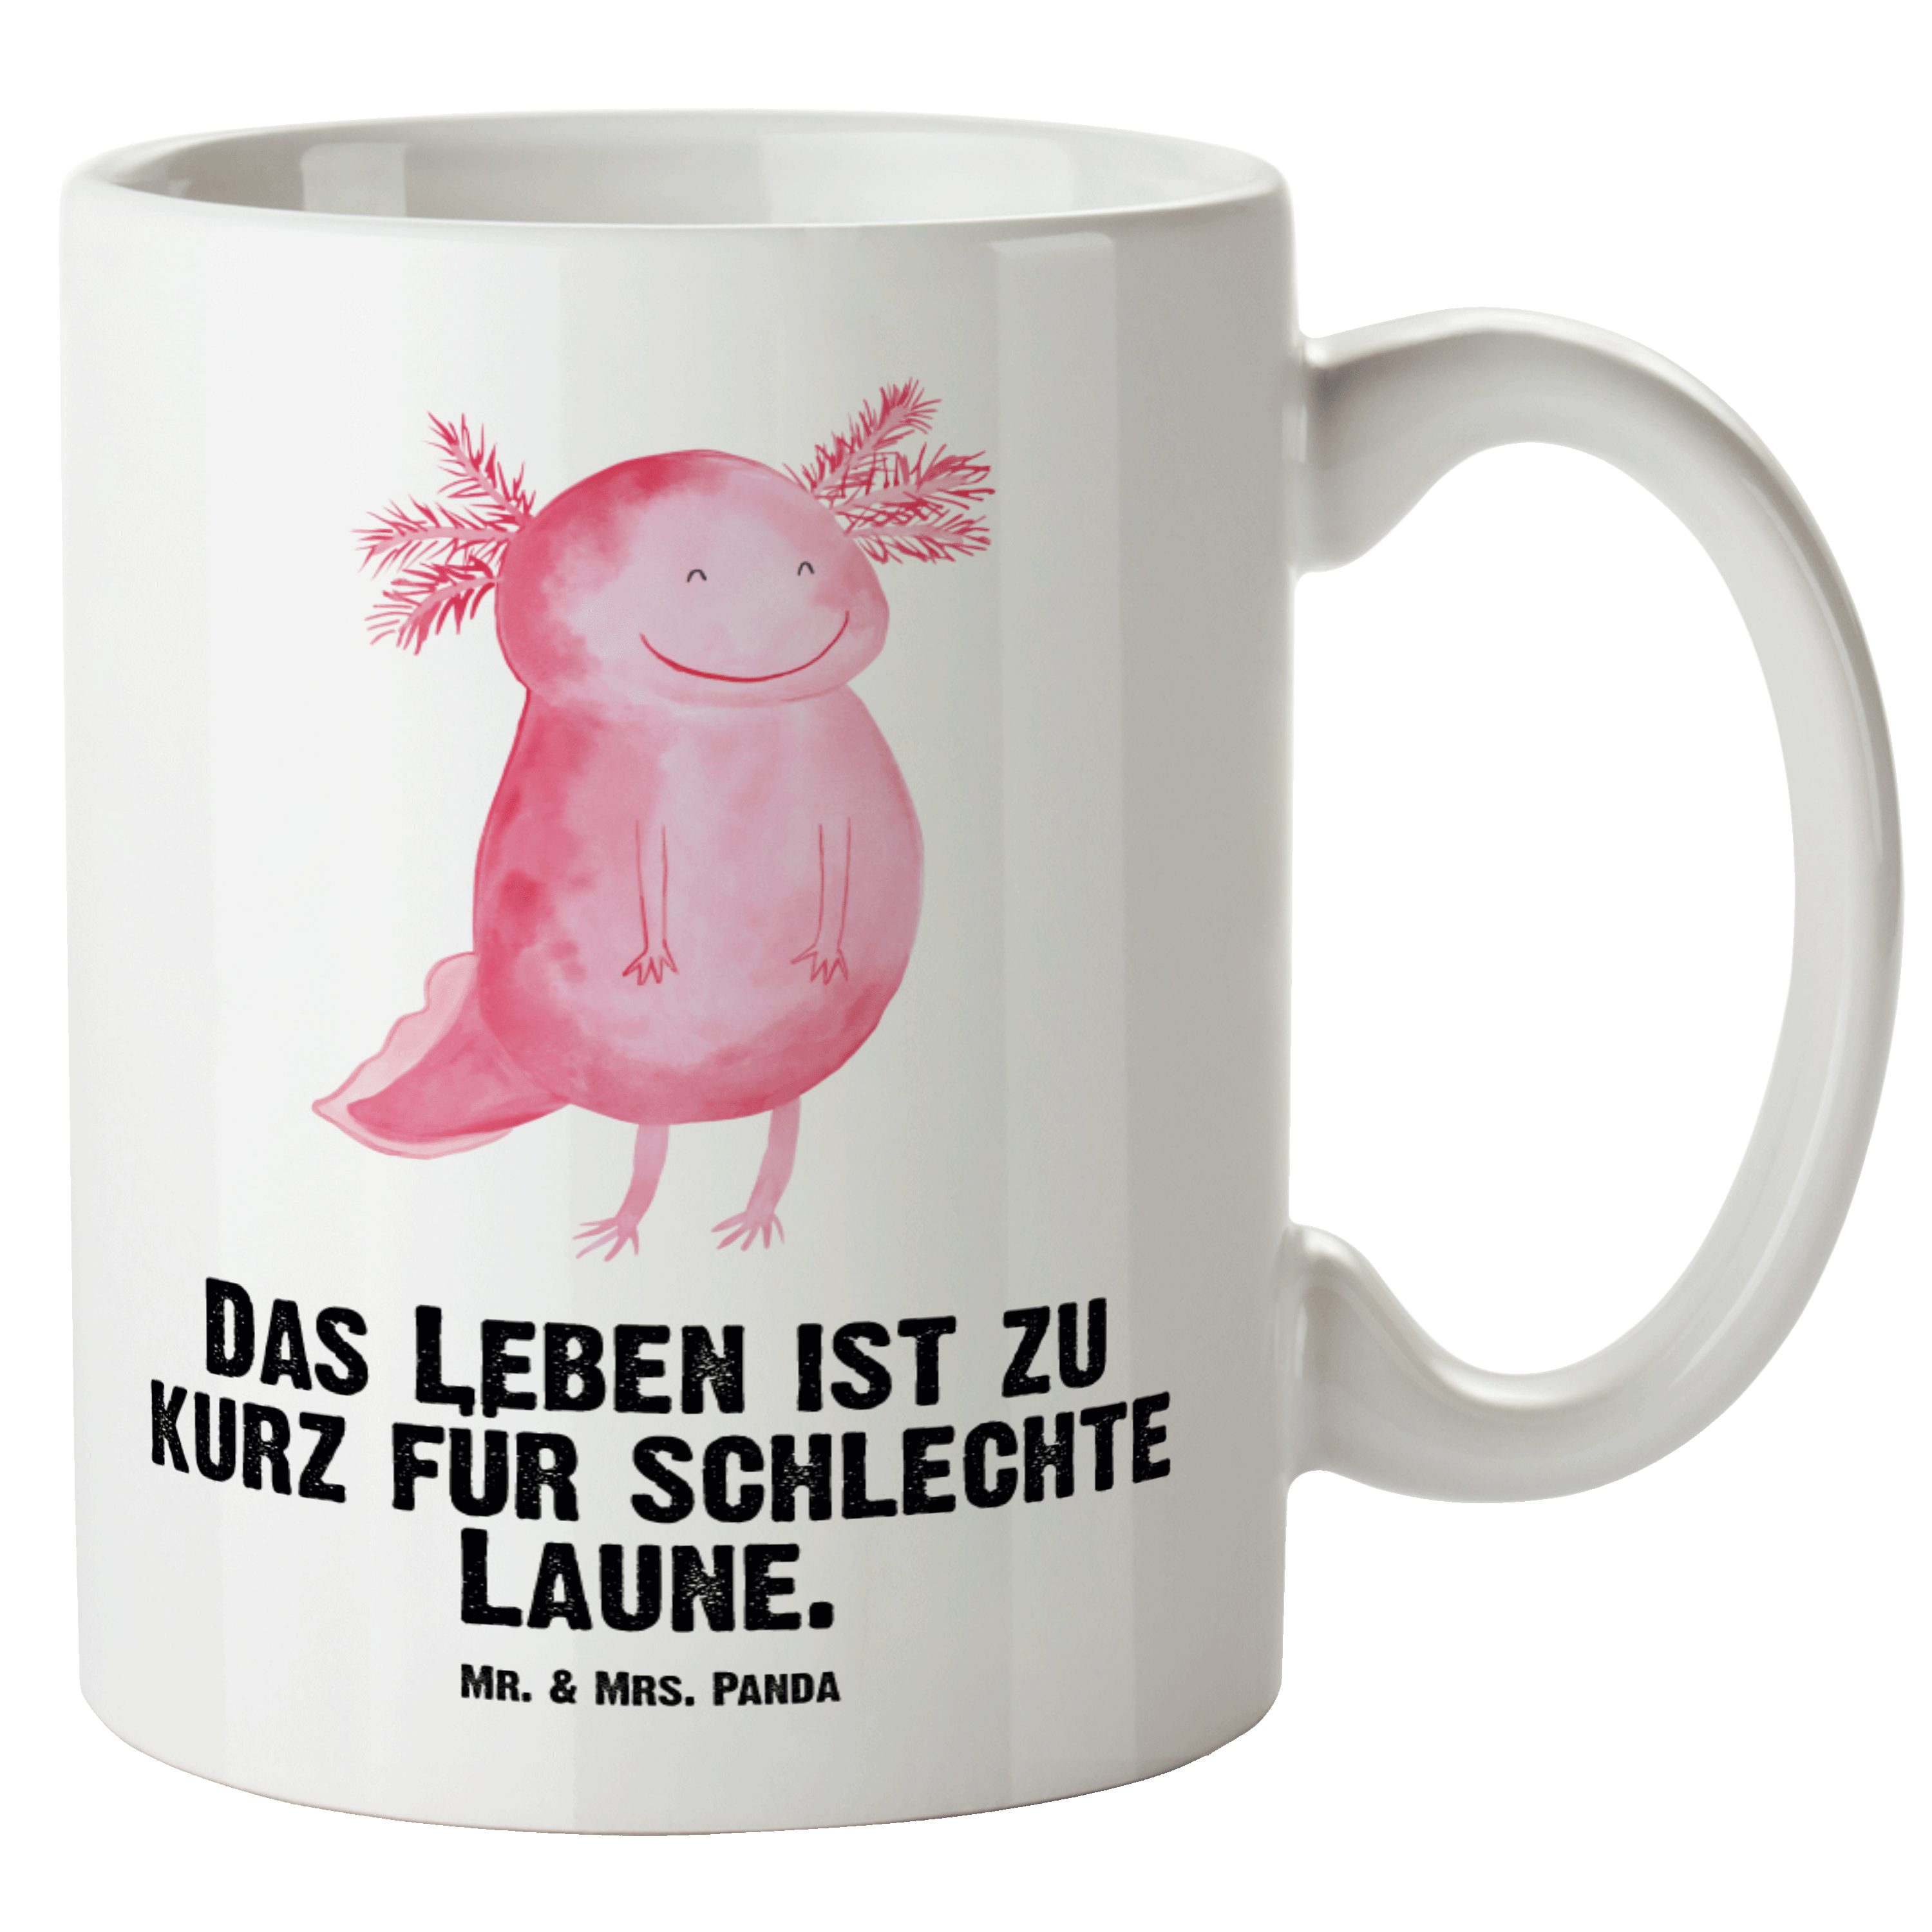 Mr. & Mrs. Panda Tasse Kaffeetasse, Tasse Keramik Grosse Weiß Geschenk, glücklich Lurch, Jumbo, - Axolotl XL 